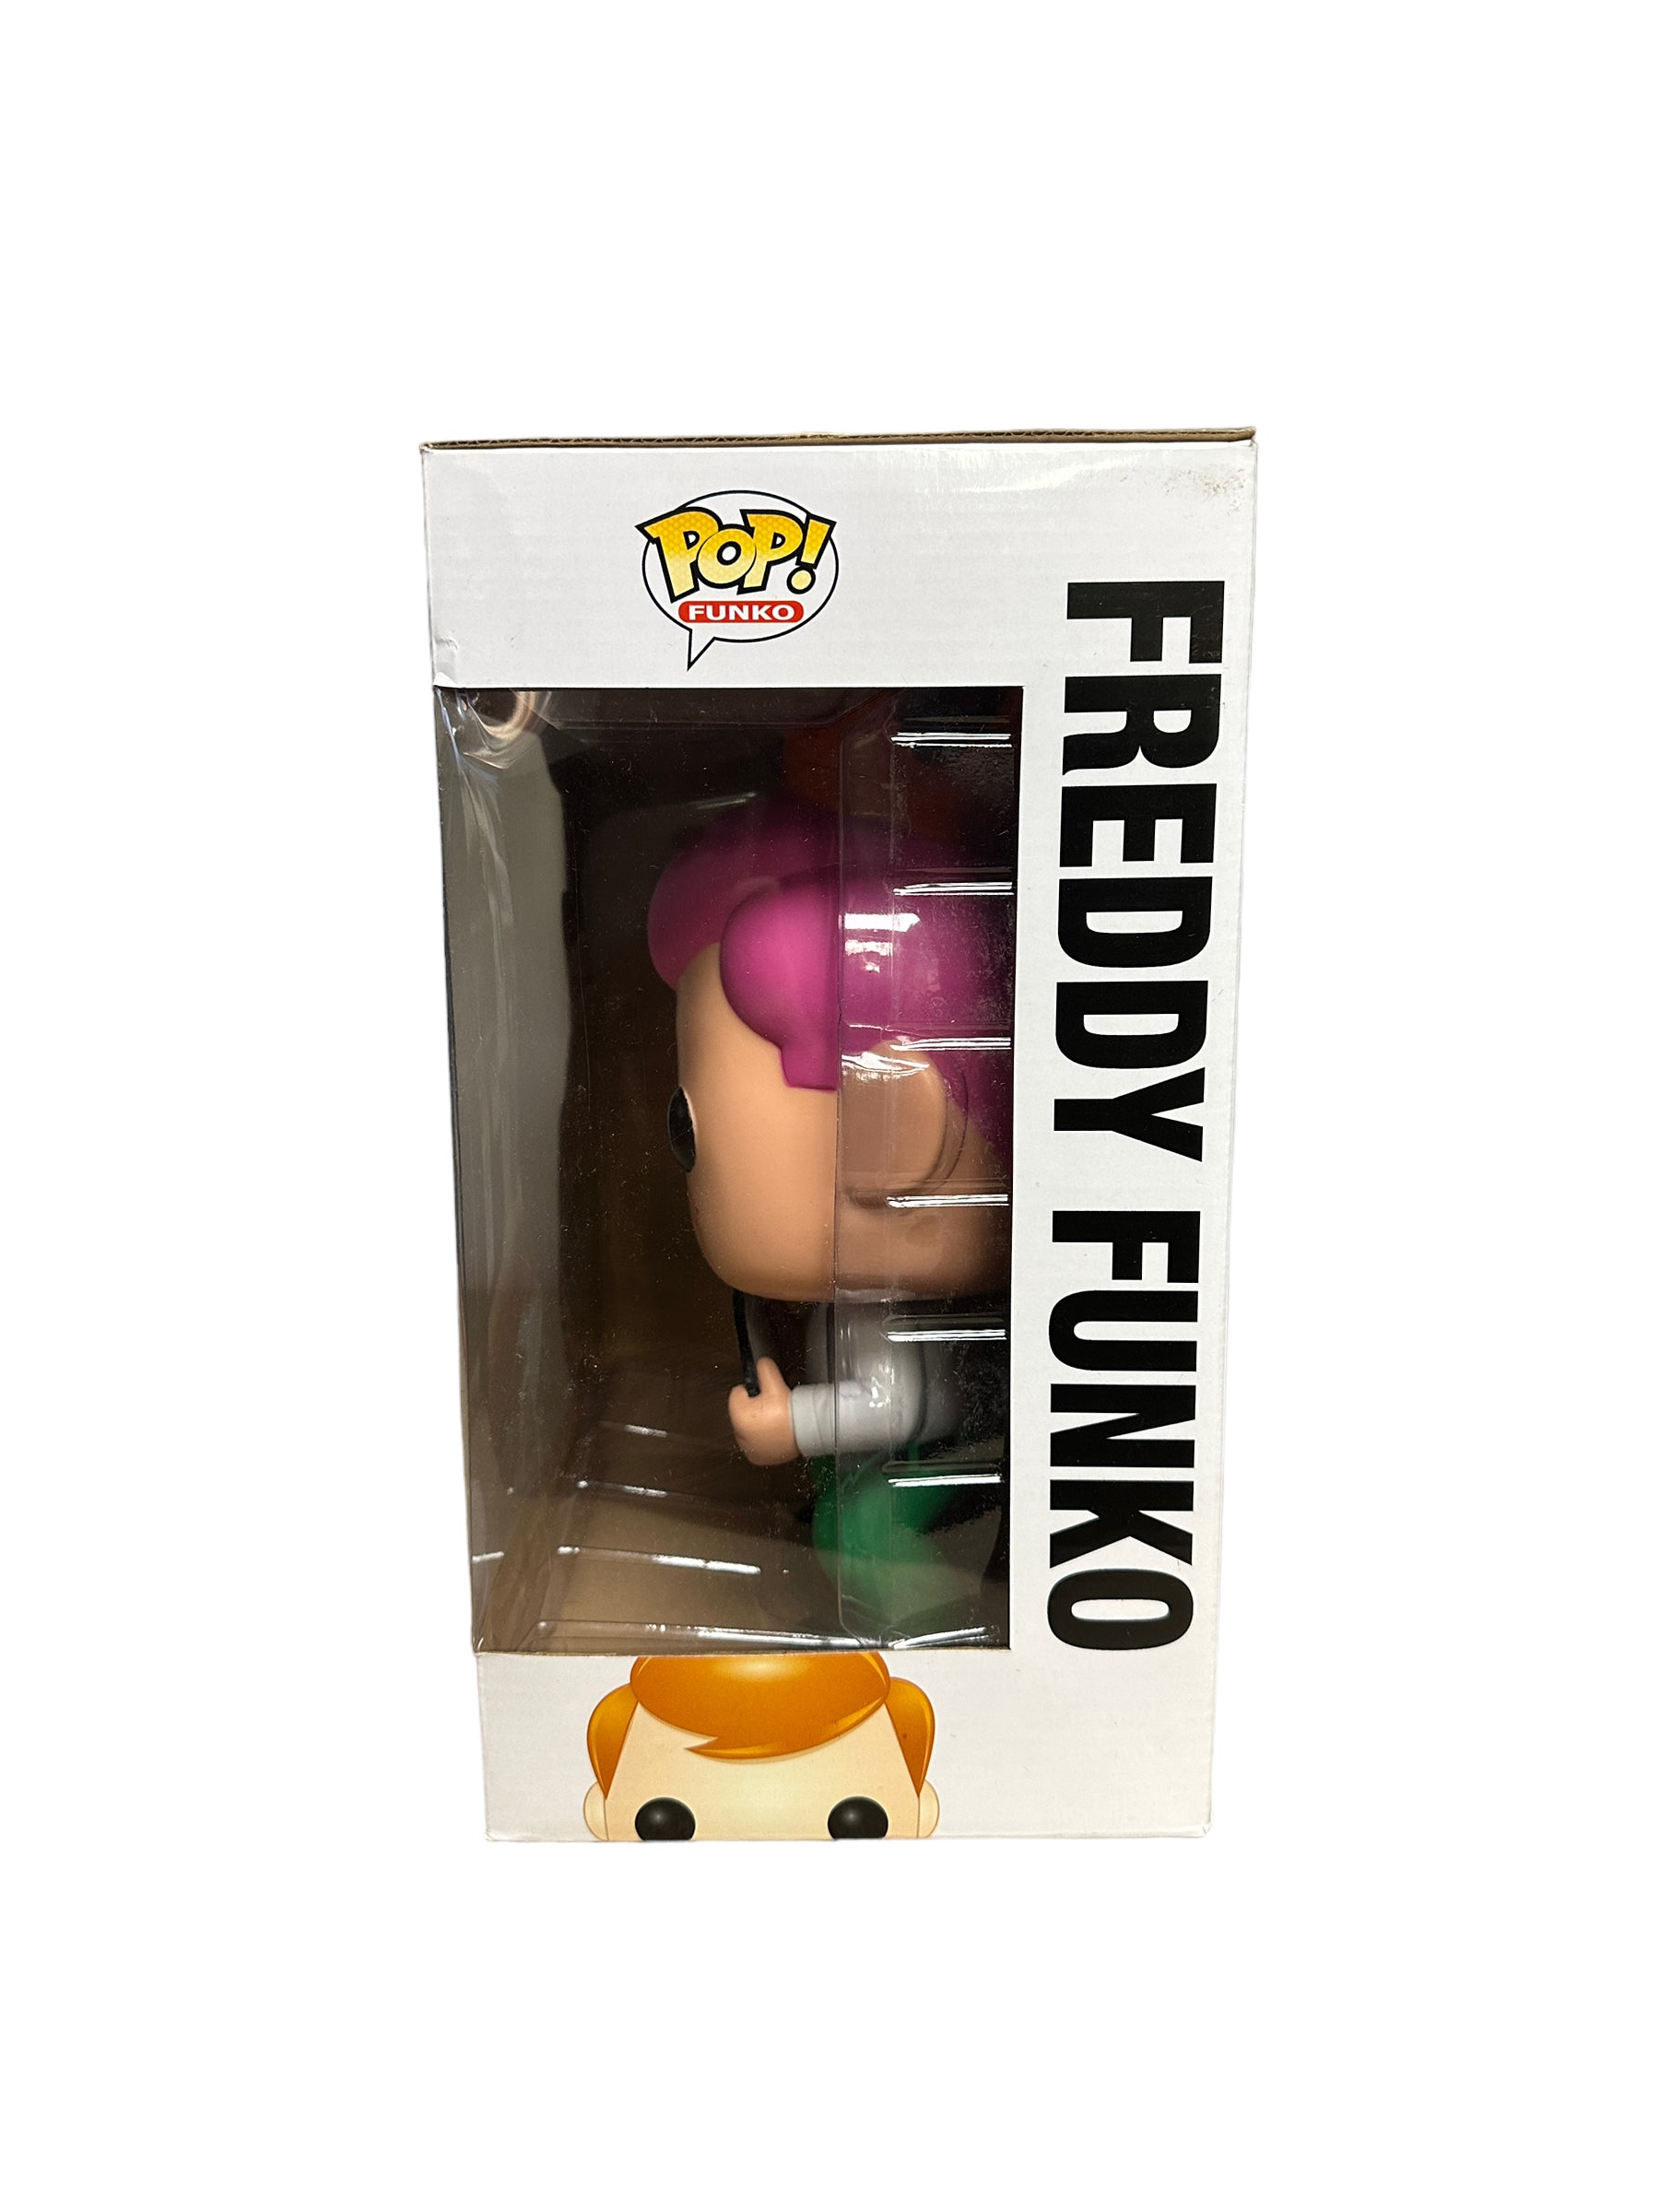 Freddy Funko Pink Hair 9" Funko Pop! - SDCC 2013 Exclusive LE48 Pcs - Condition 8/10